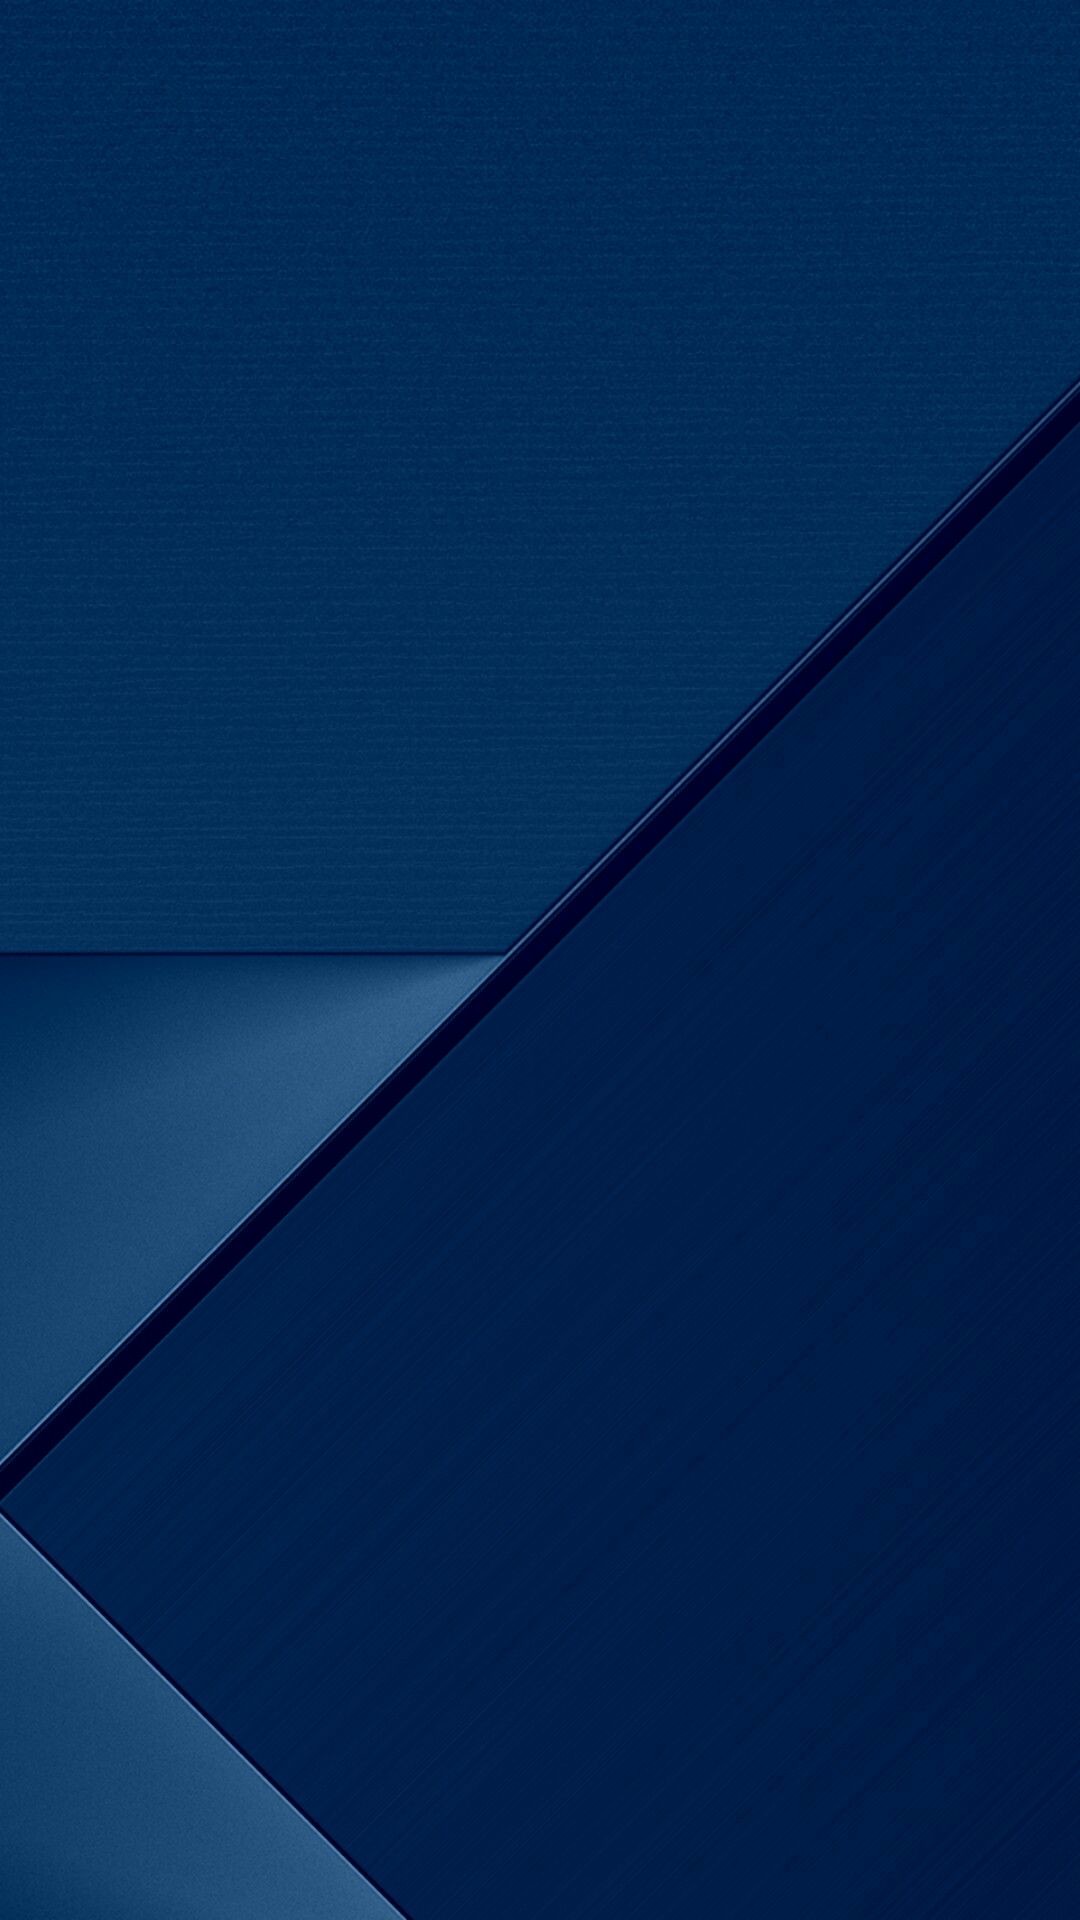 1080x1920 Blue Geometric Abstract Wallpaper